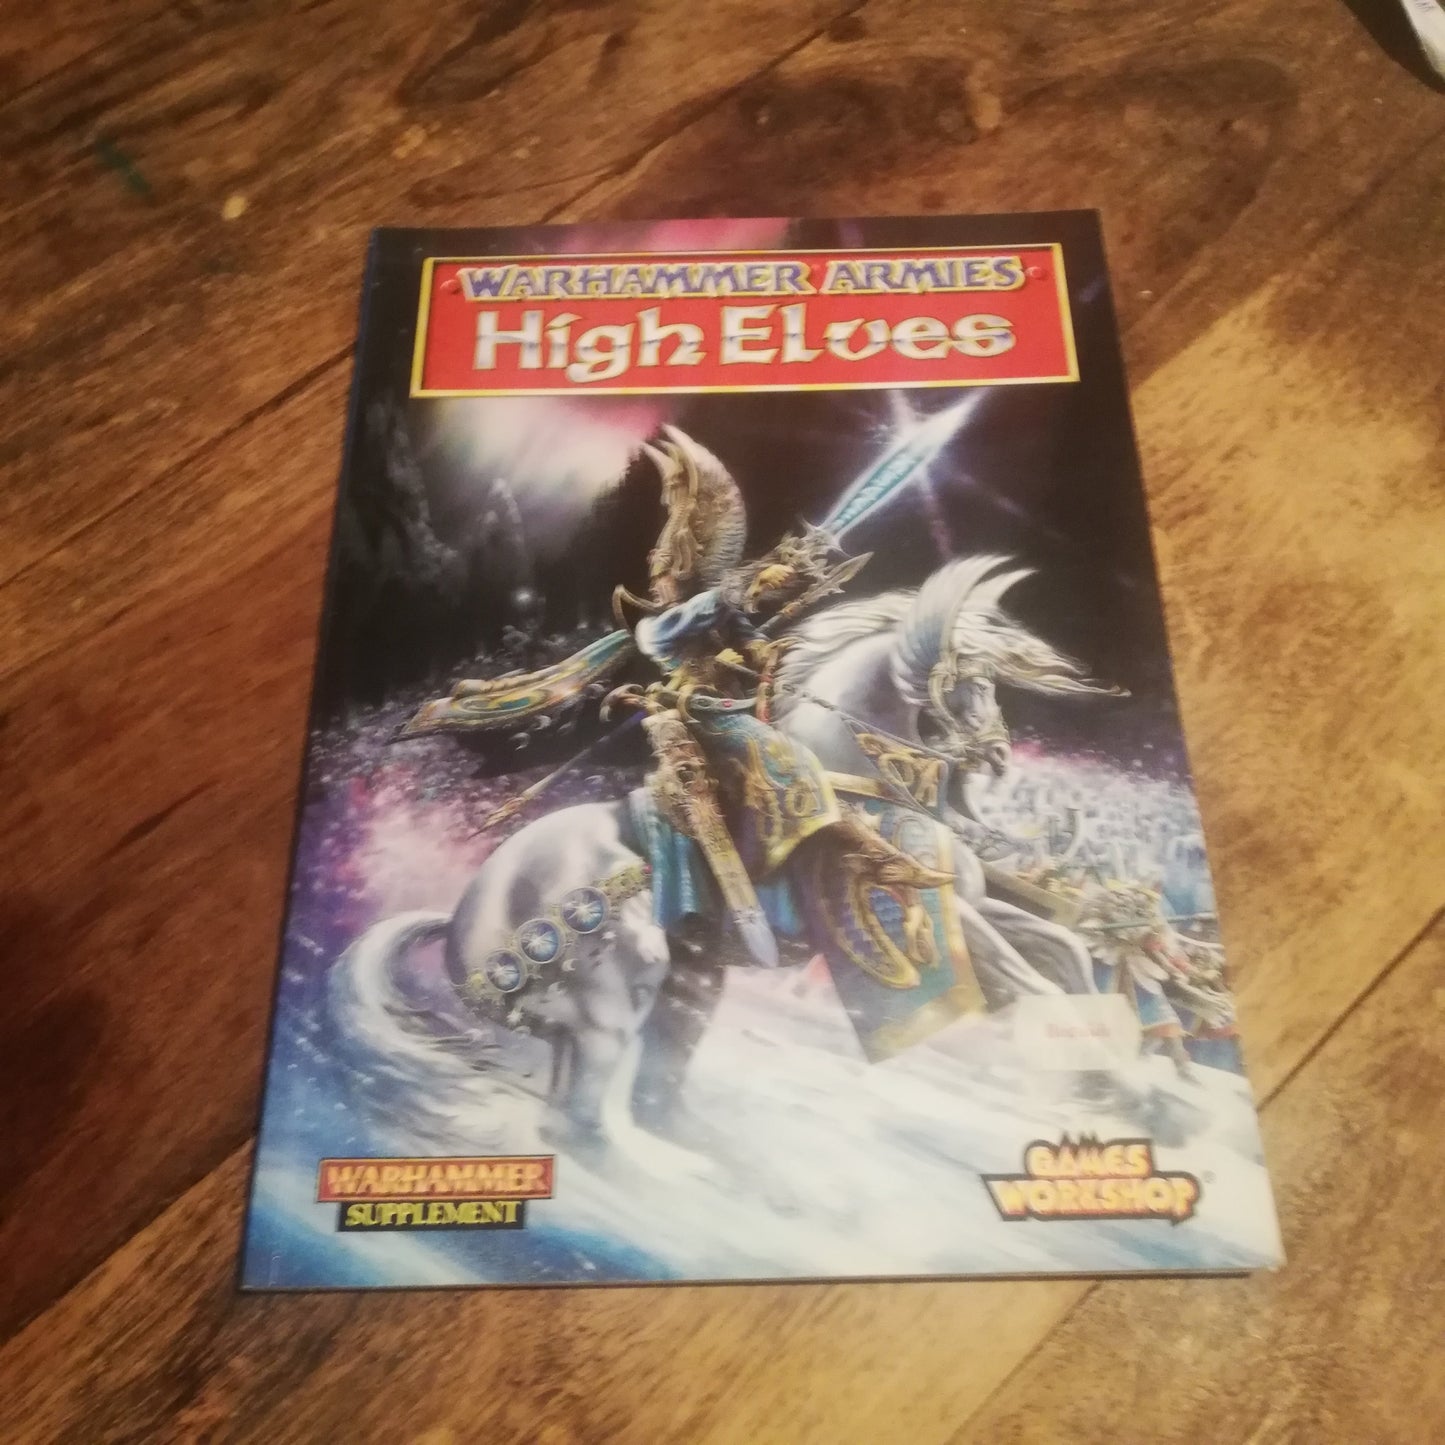 Warhammer High Elves SUPPLEMENT 1997 Edition Army Book Codex Games Workshop - AllRoleplaying.com